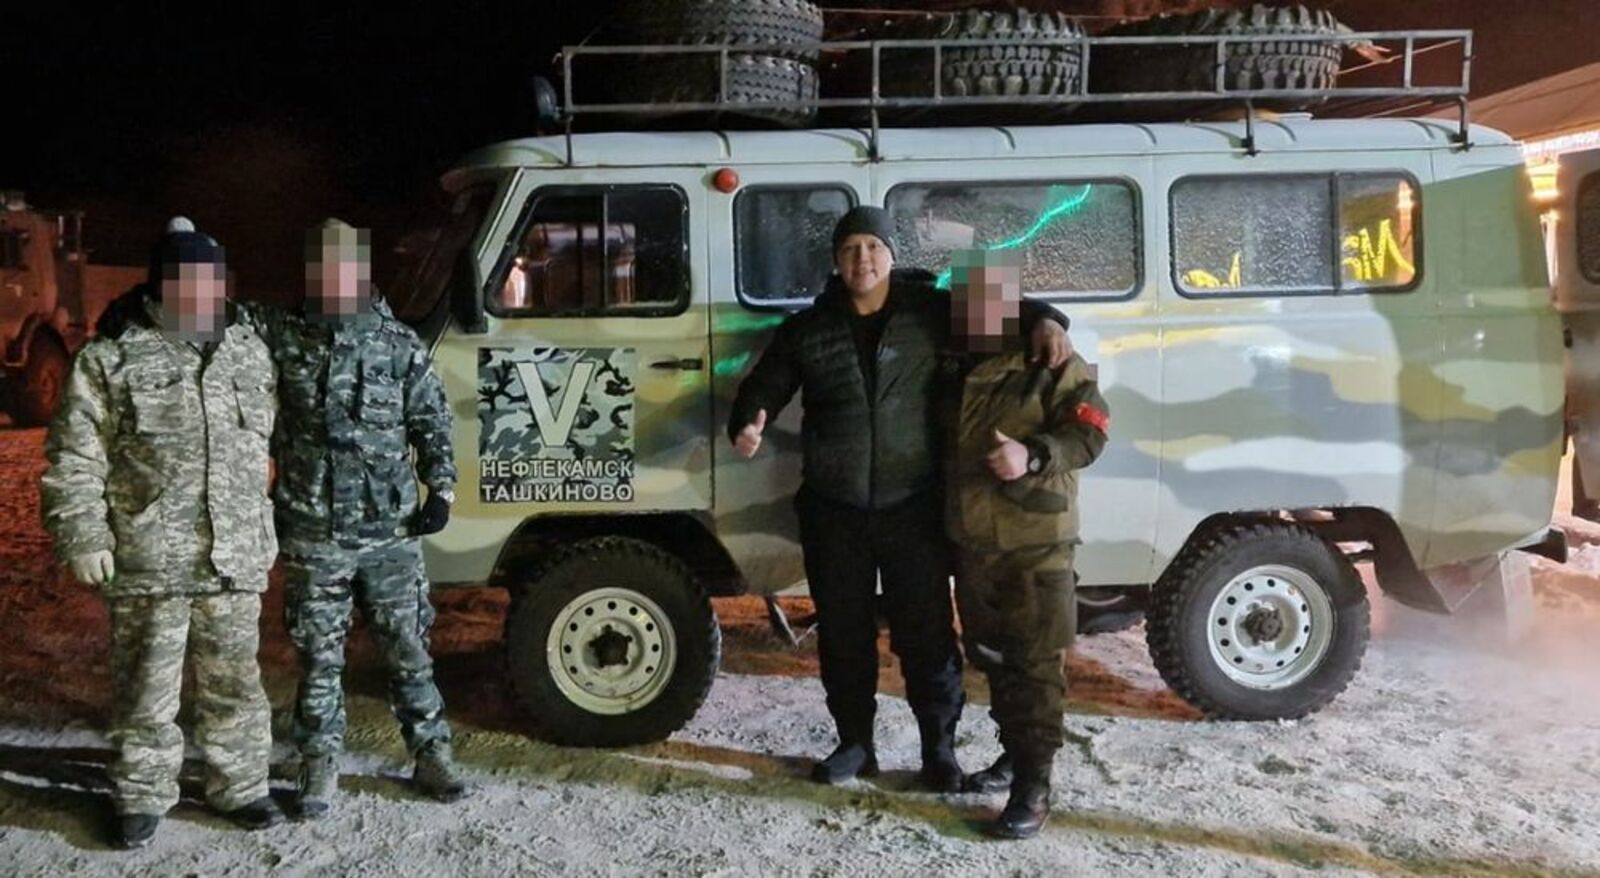 Адис Валеев с бойцами на фоне привезённого им УАЗа.